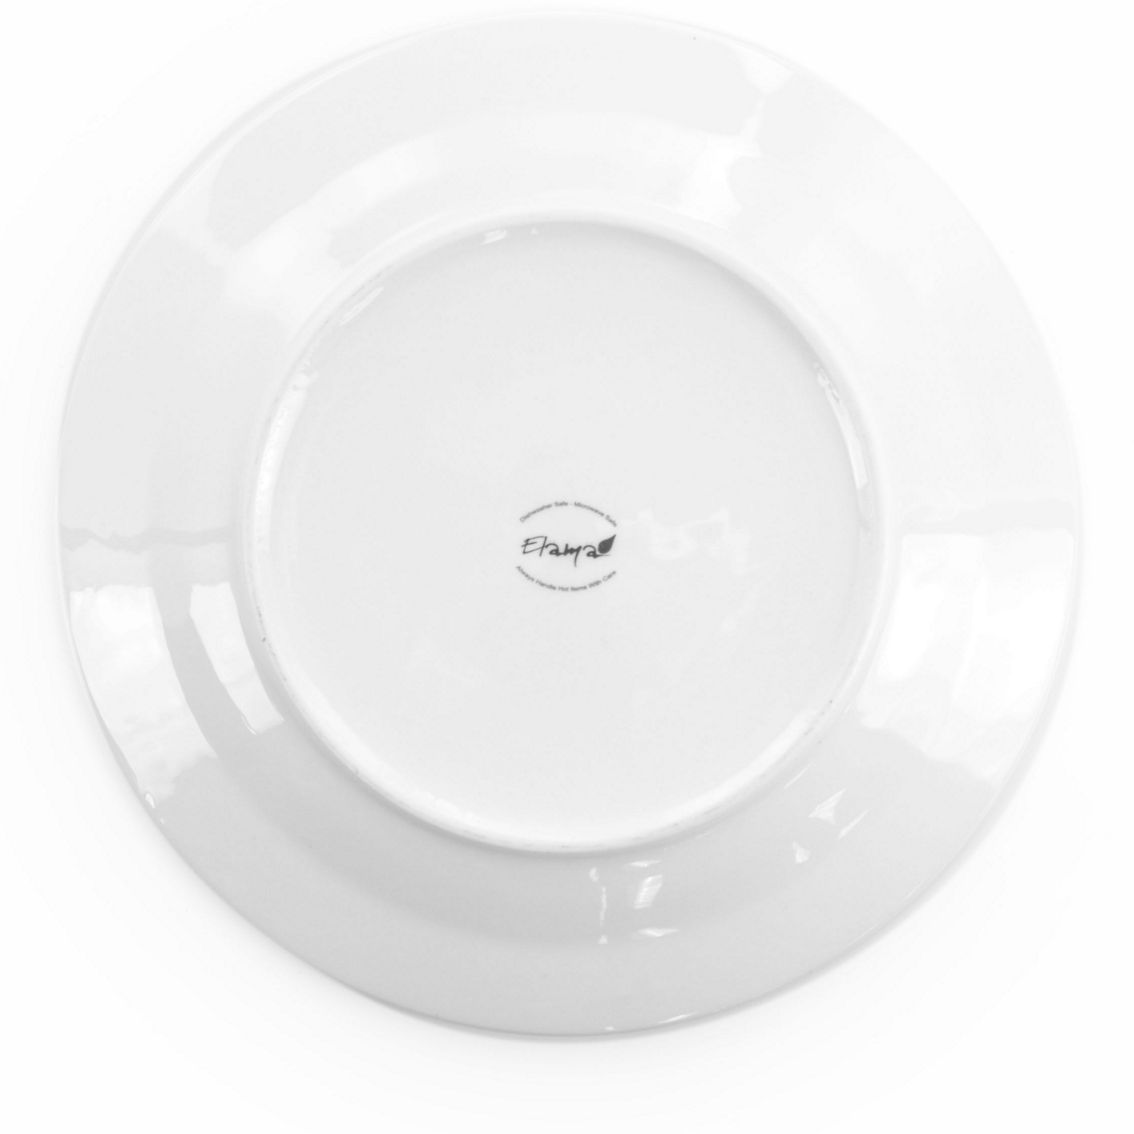 Elama Carey 18 Piece Round Porcelain Dinnerware Set in White - Image 5 of 5